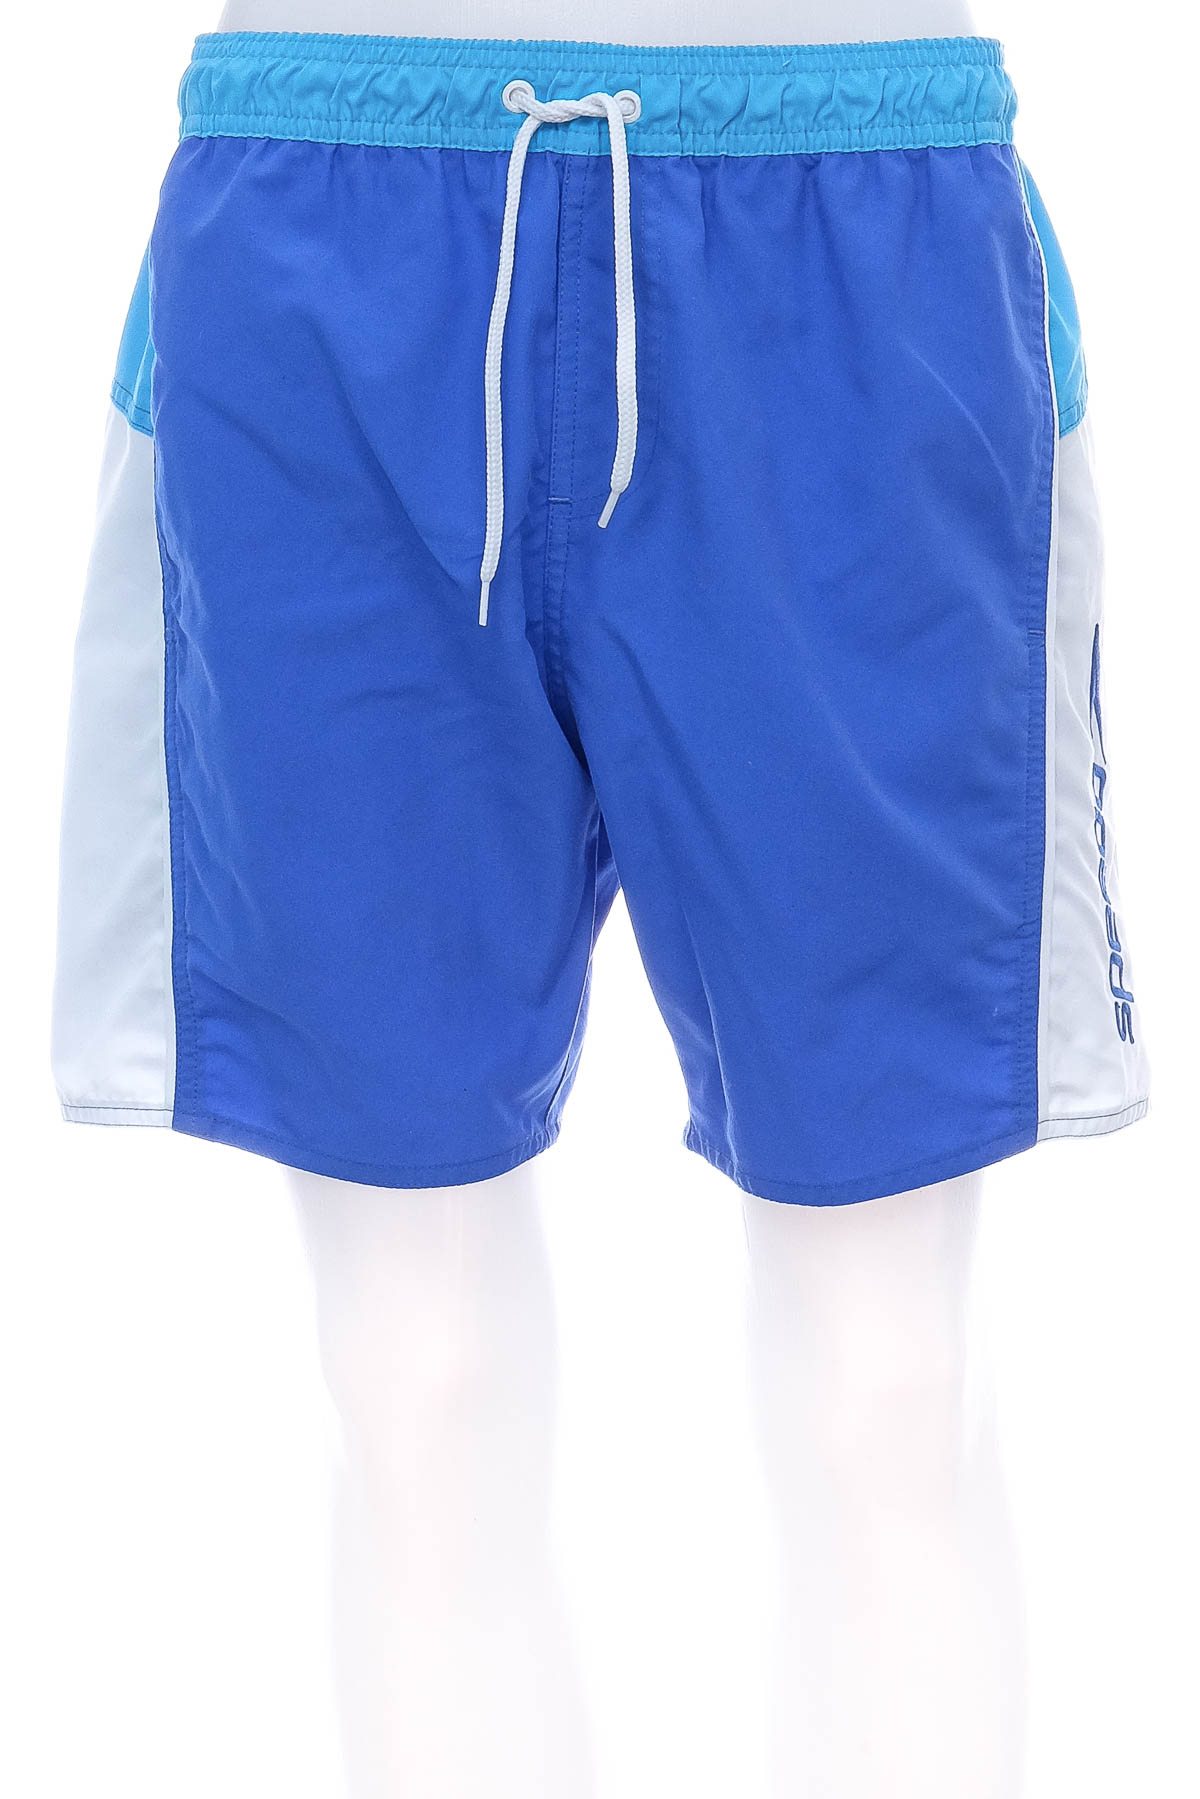 Men's shorts - Speedo - 0